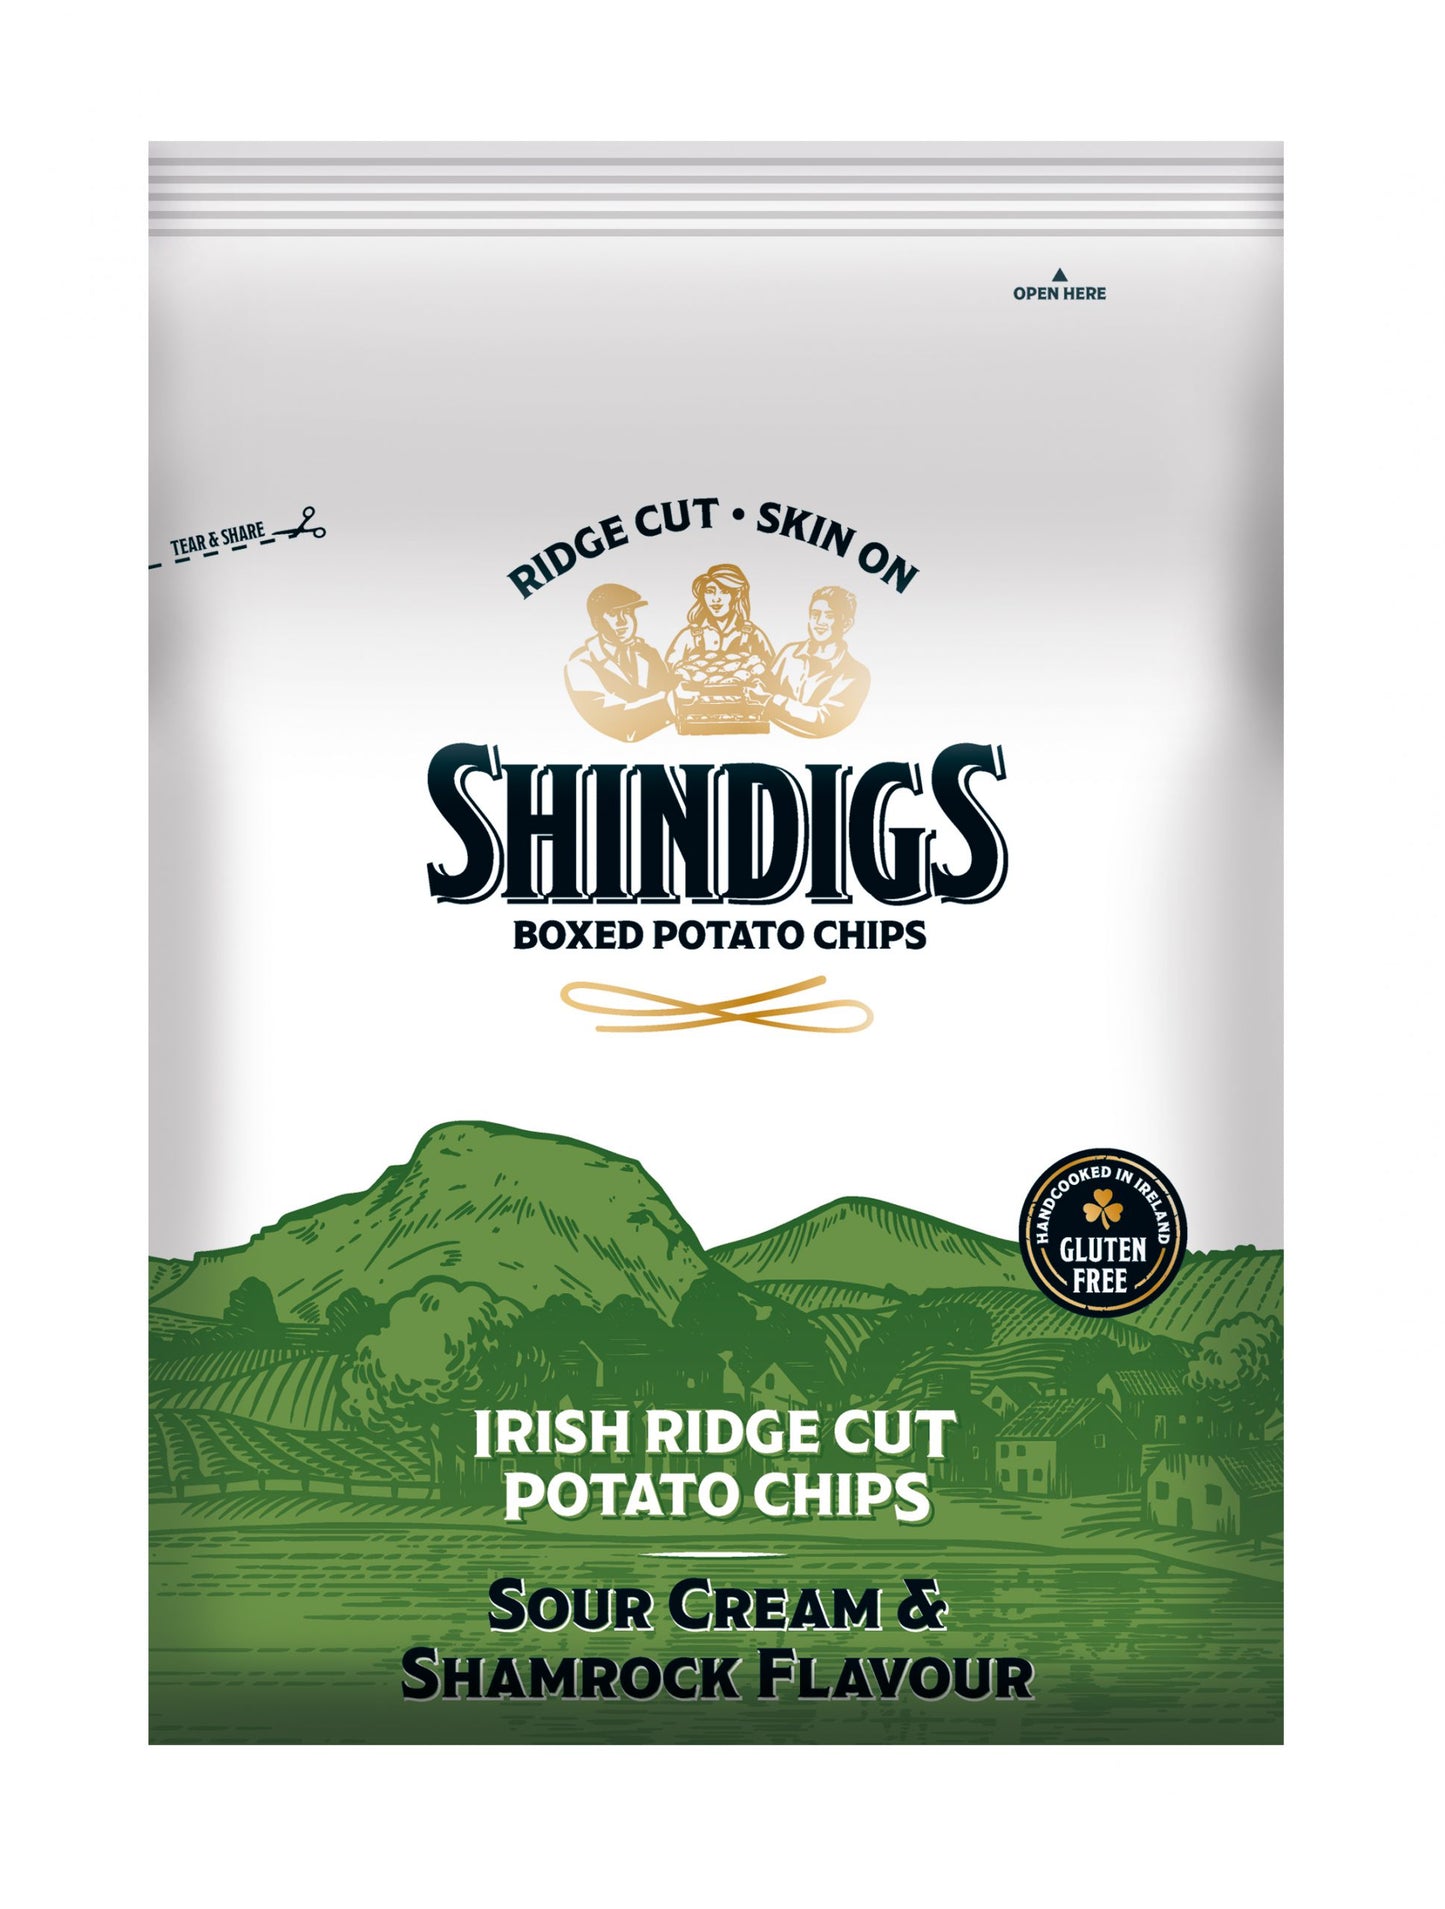 Shindigs Sour Cream and Shamrock Crisps